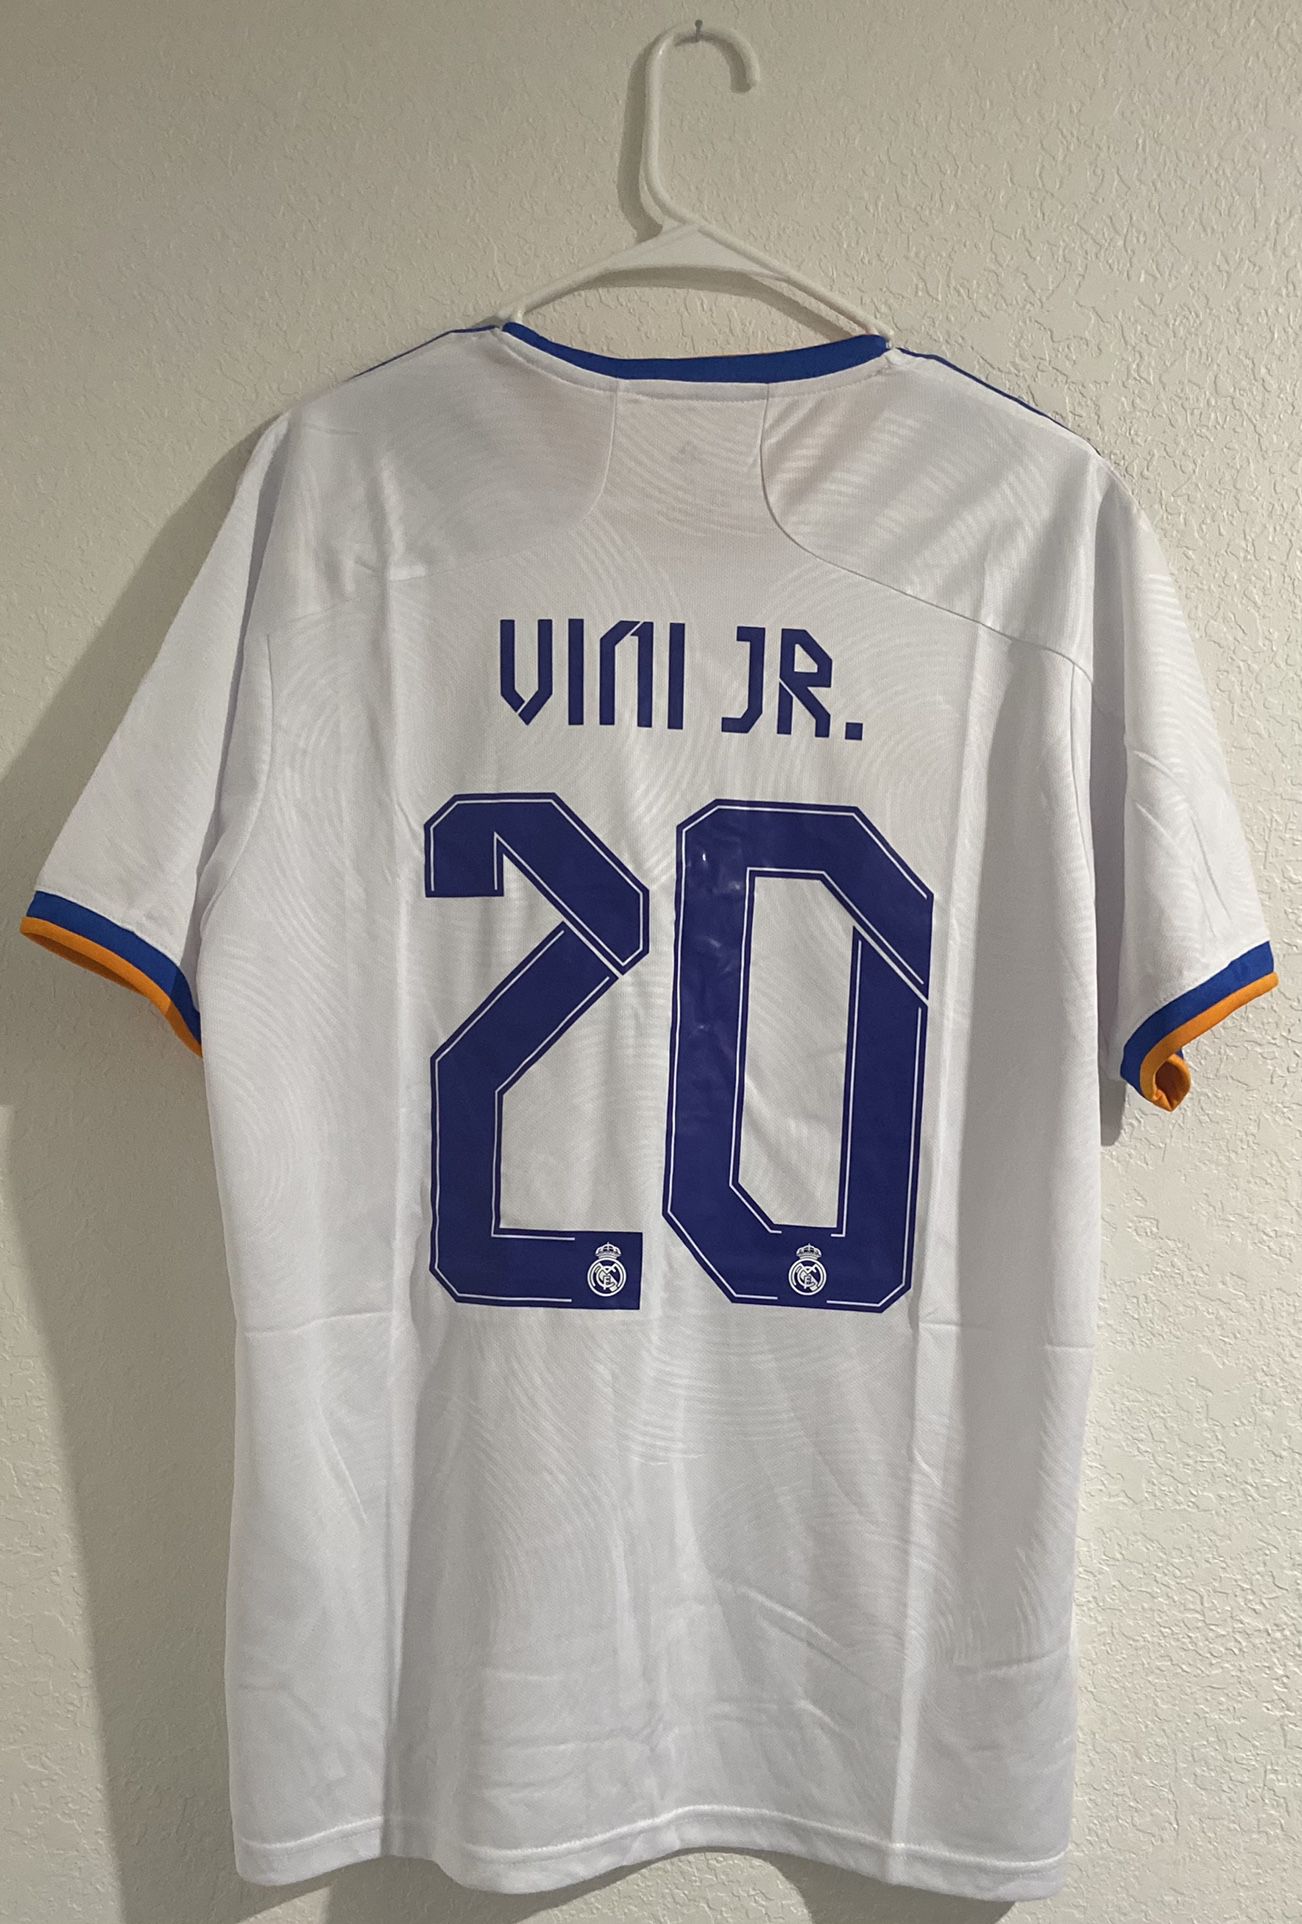 Real Madrid Vinicius Jr #20 Home Jersey Sale!!! Size XL 